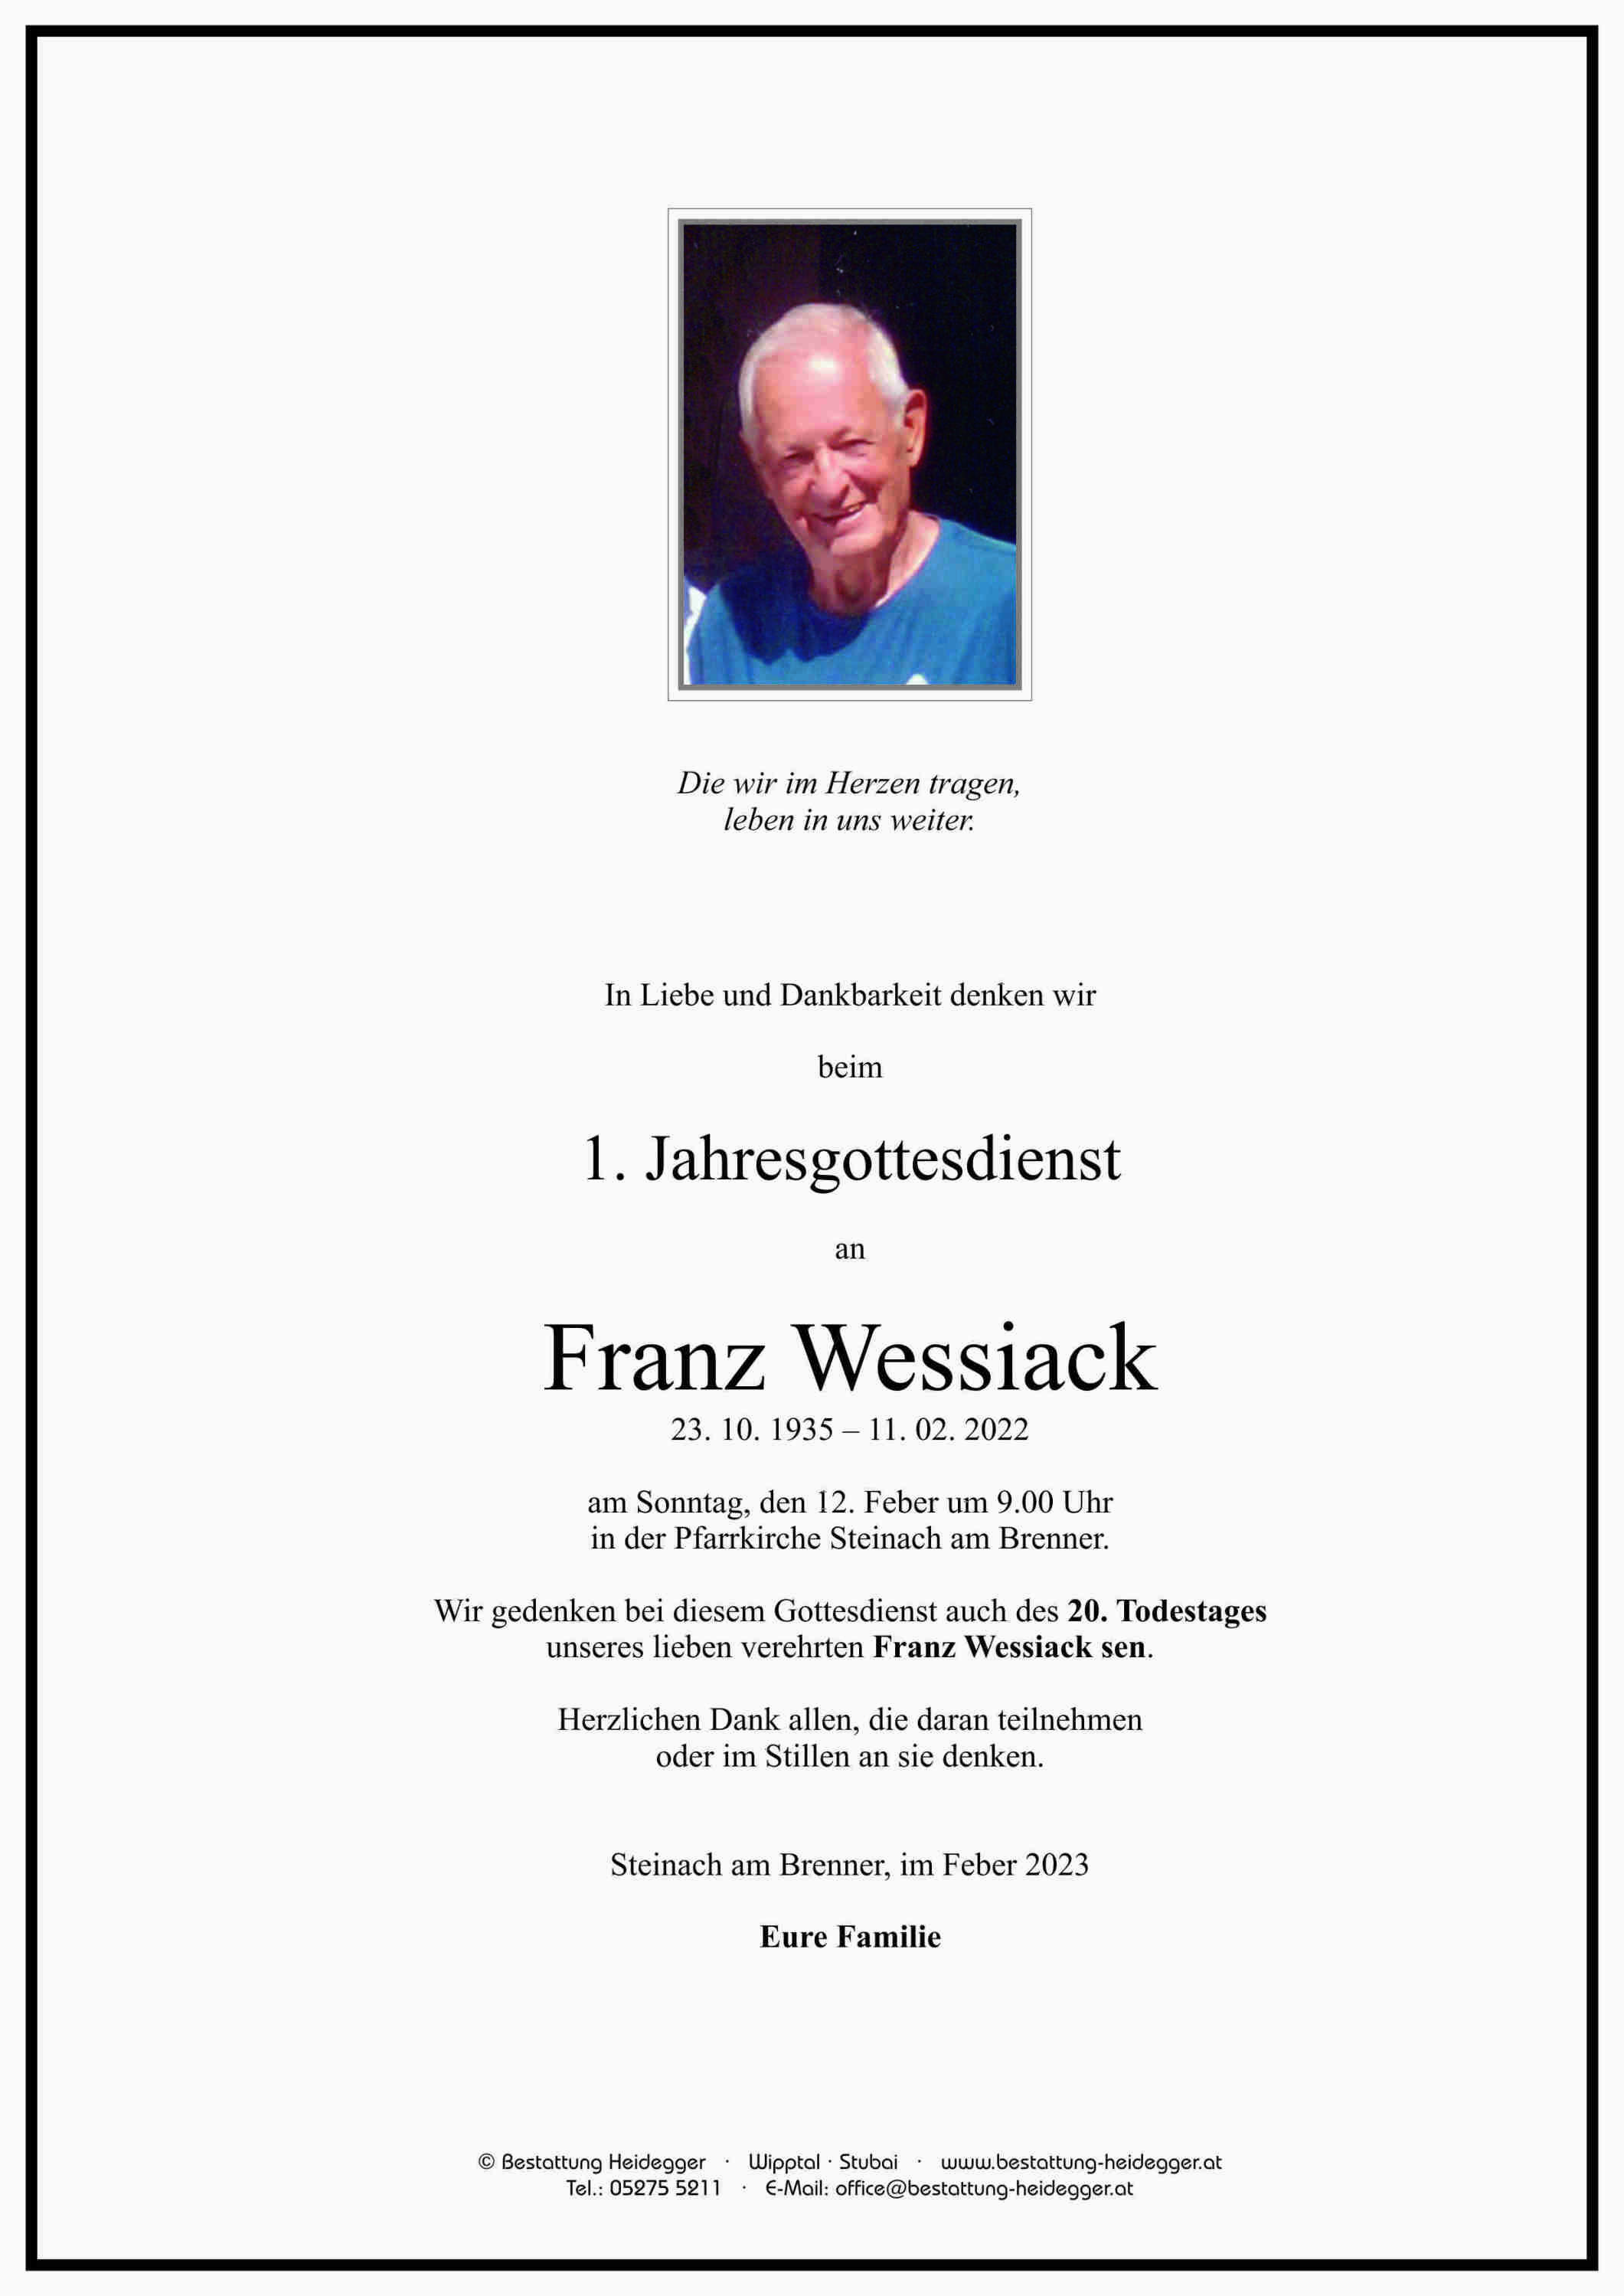 Franz Wessiack